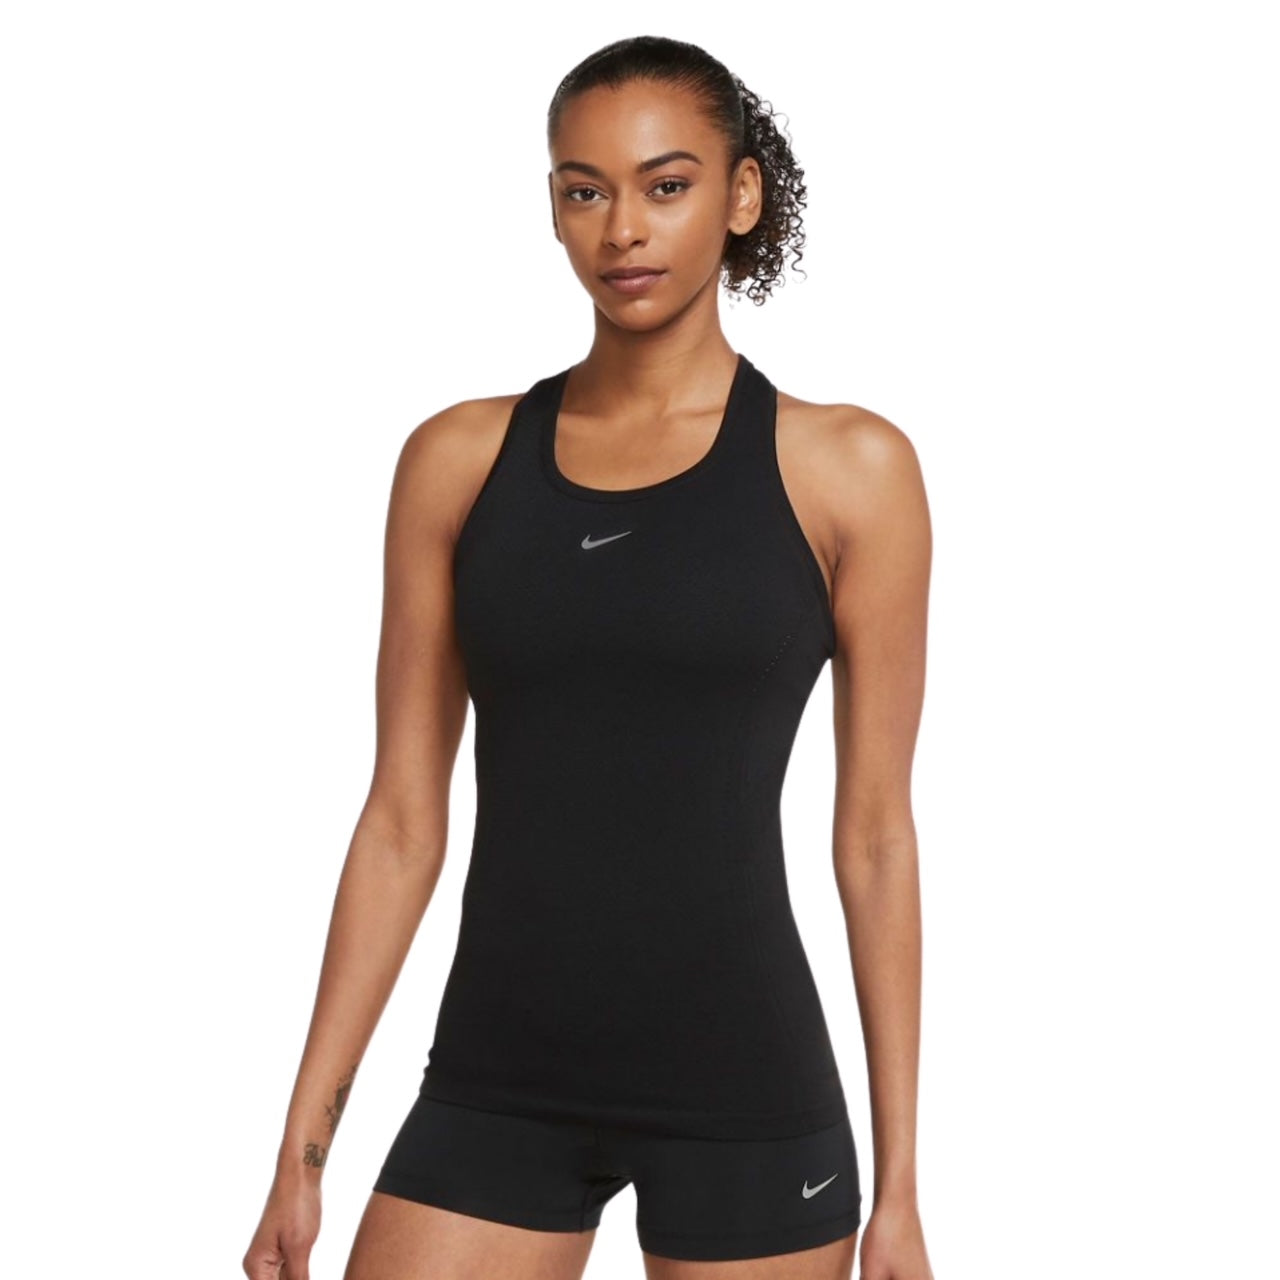 Nike Women's Dri-Fit Infinite Tank Top BV3909 500 Size Small